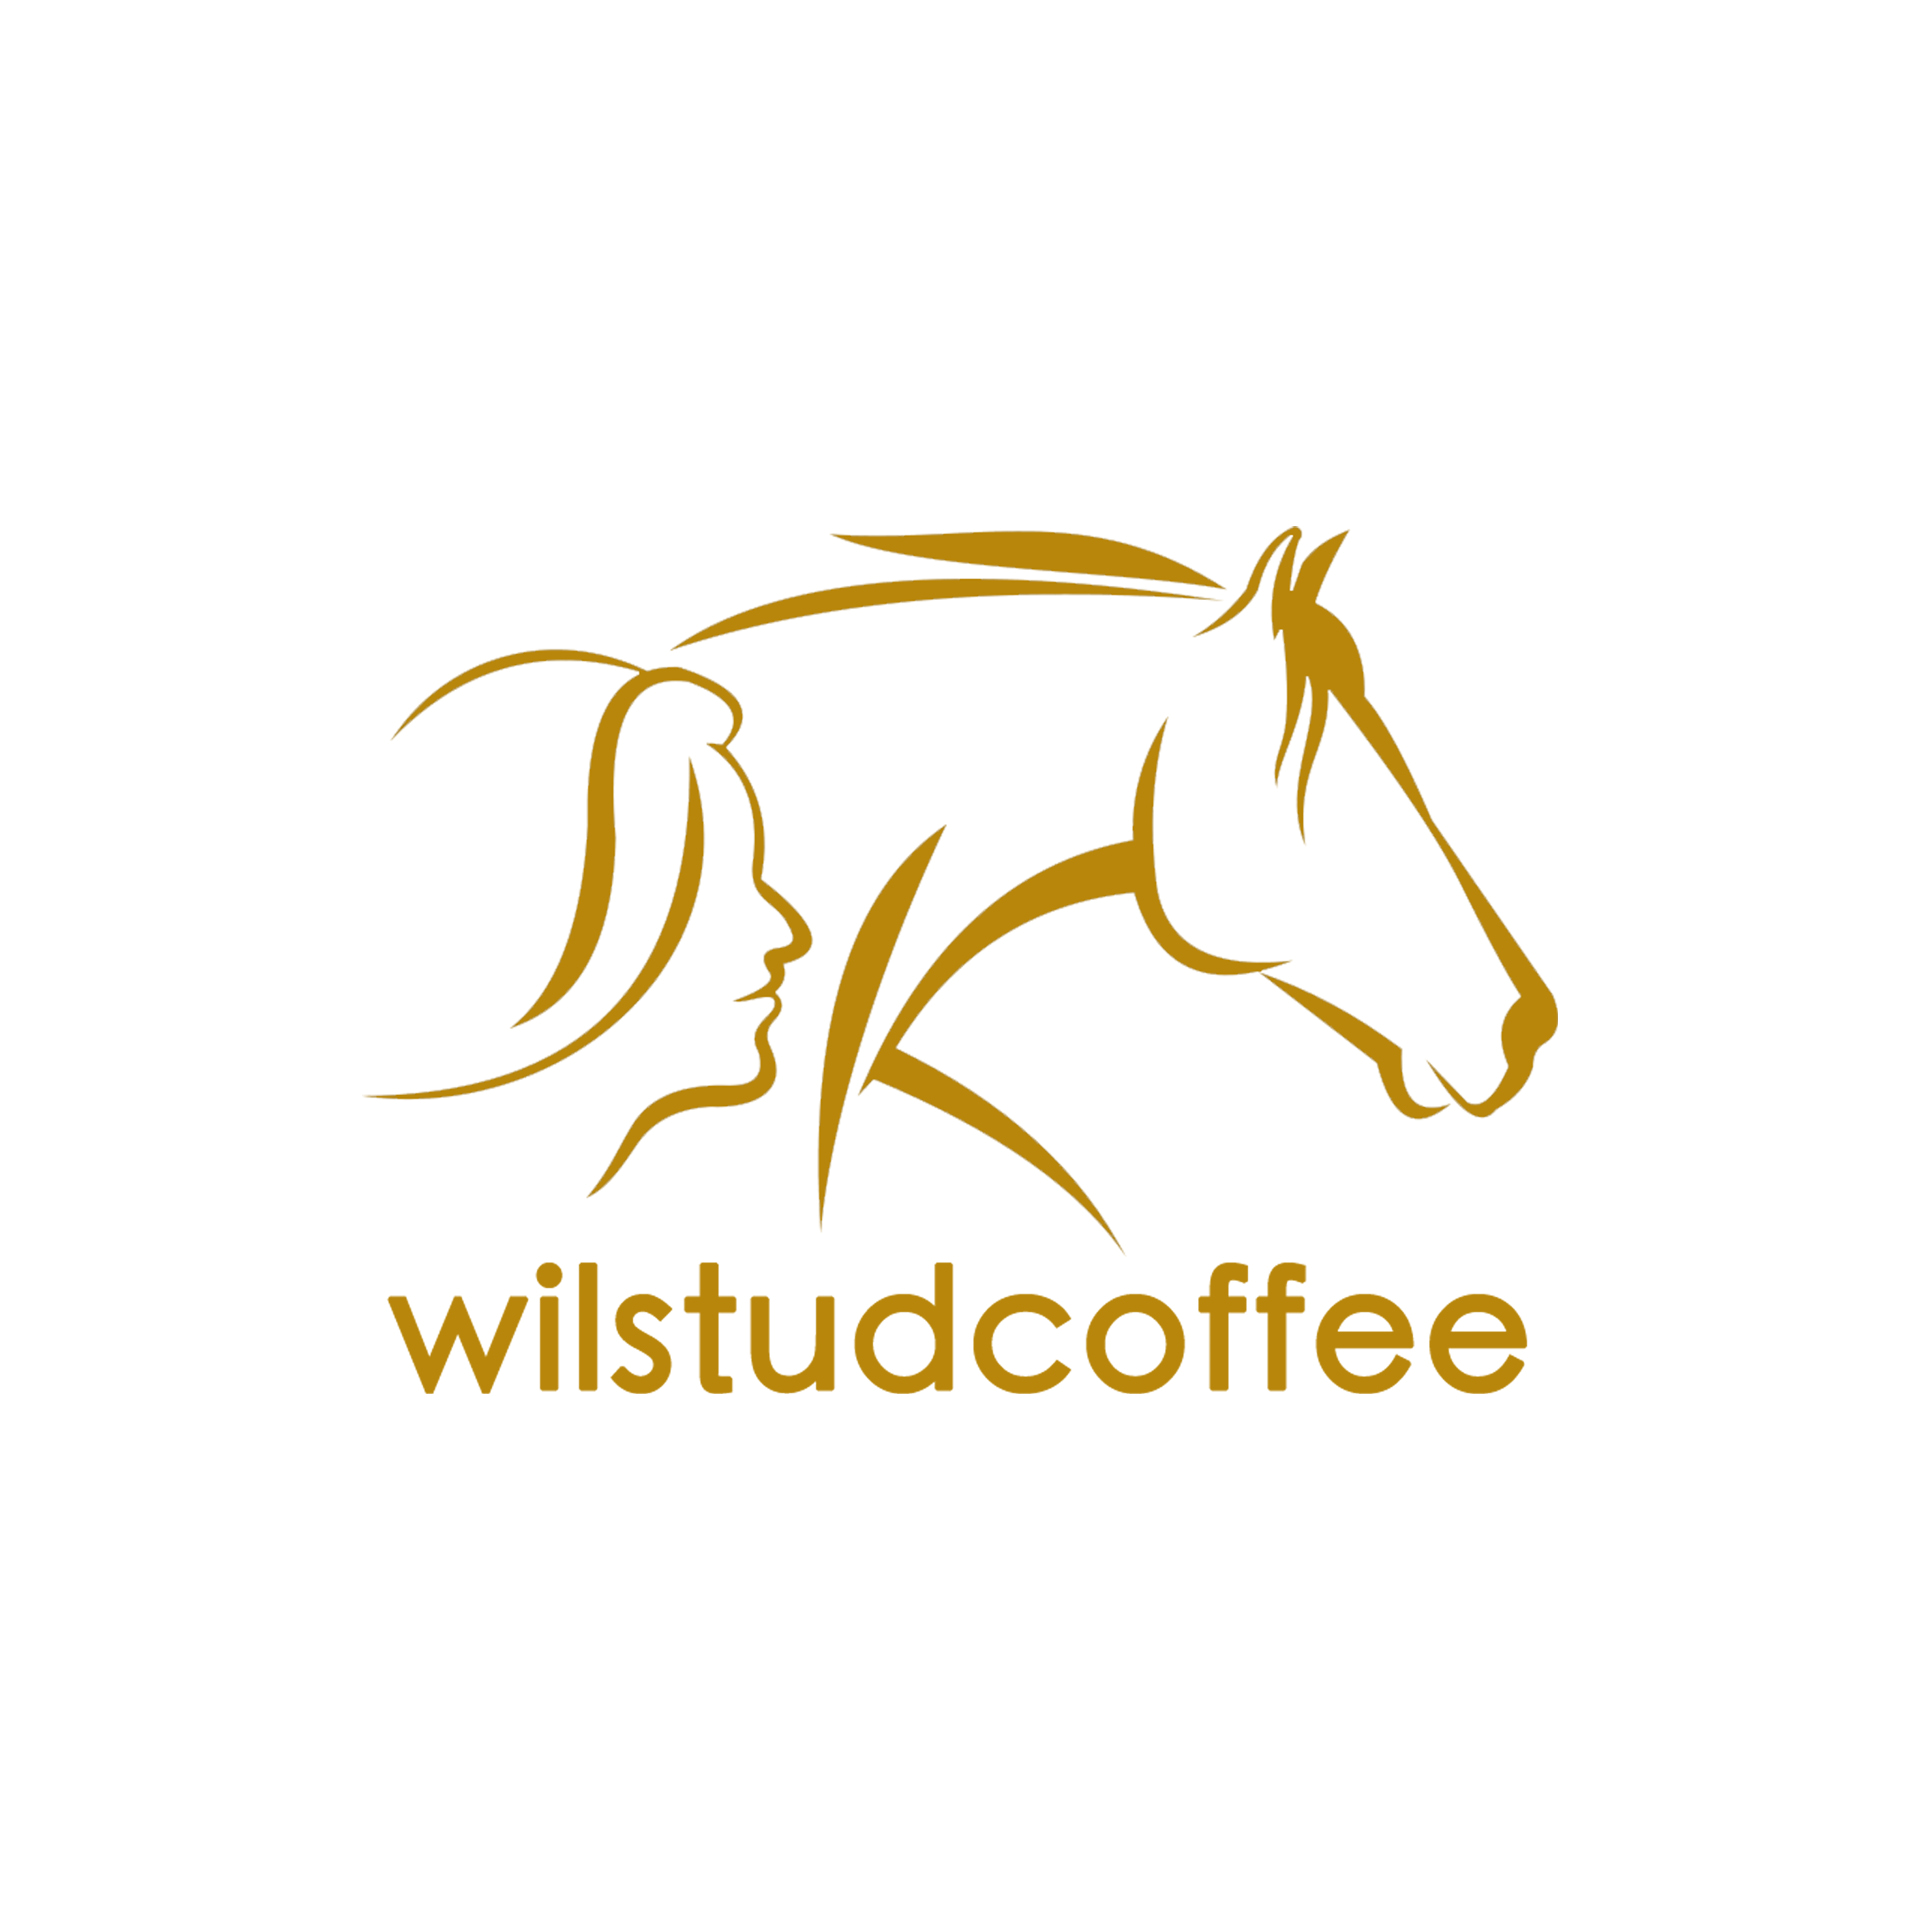 wildstudcoffee